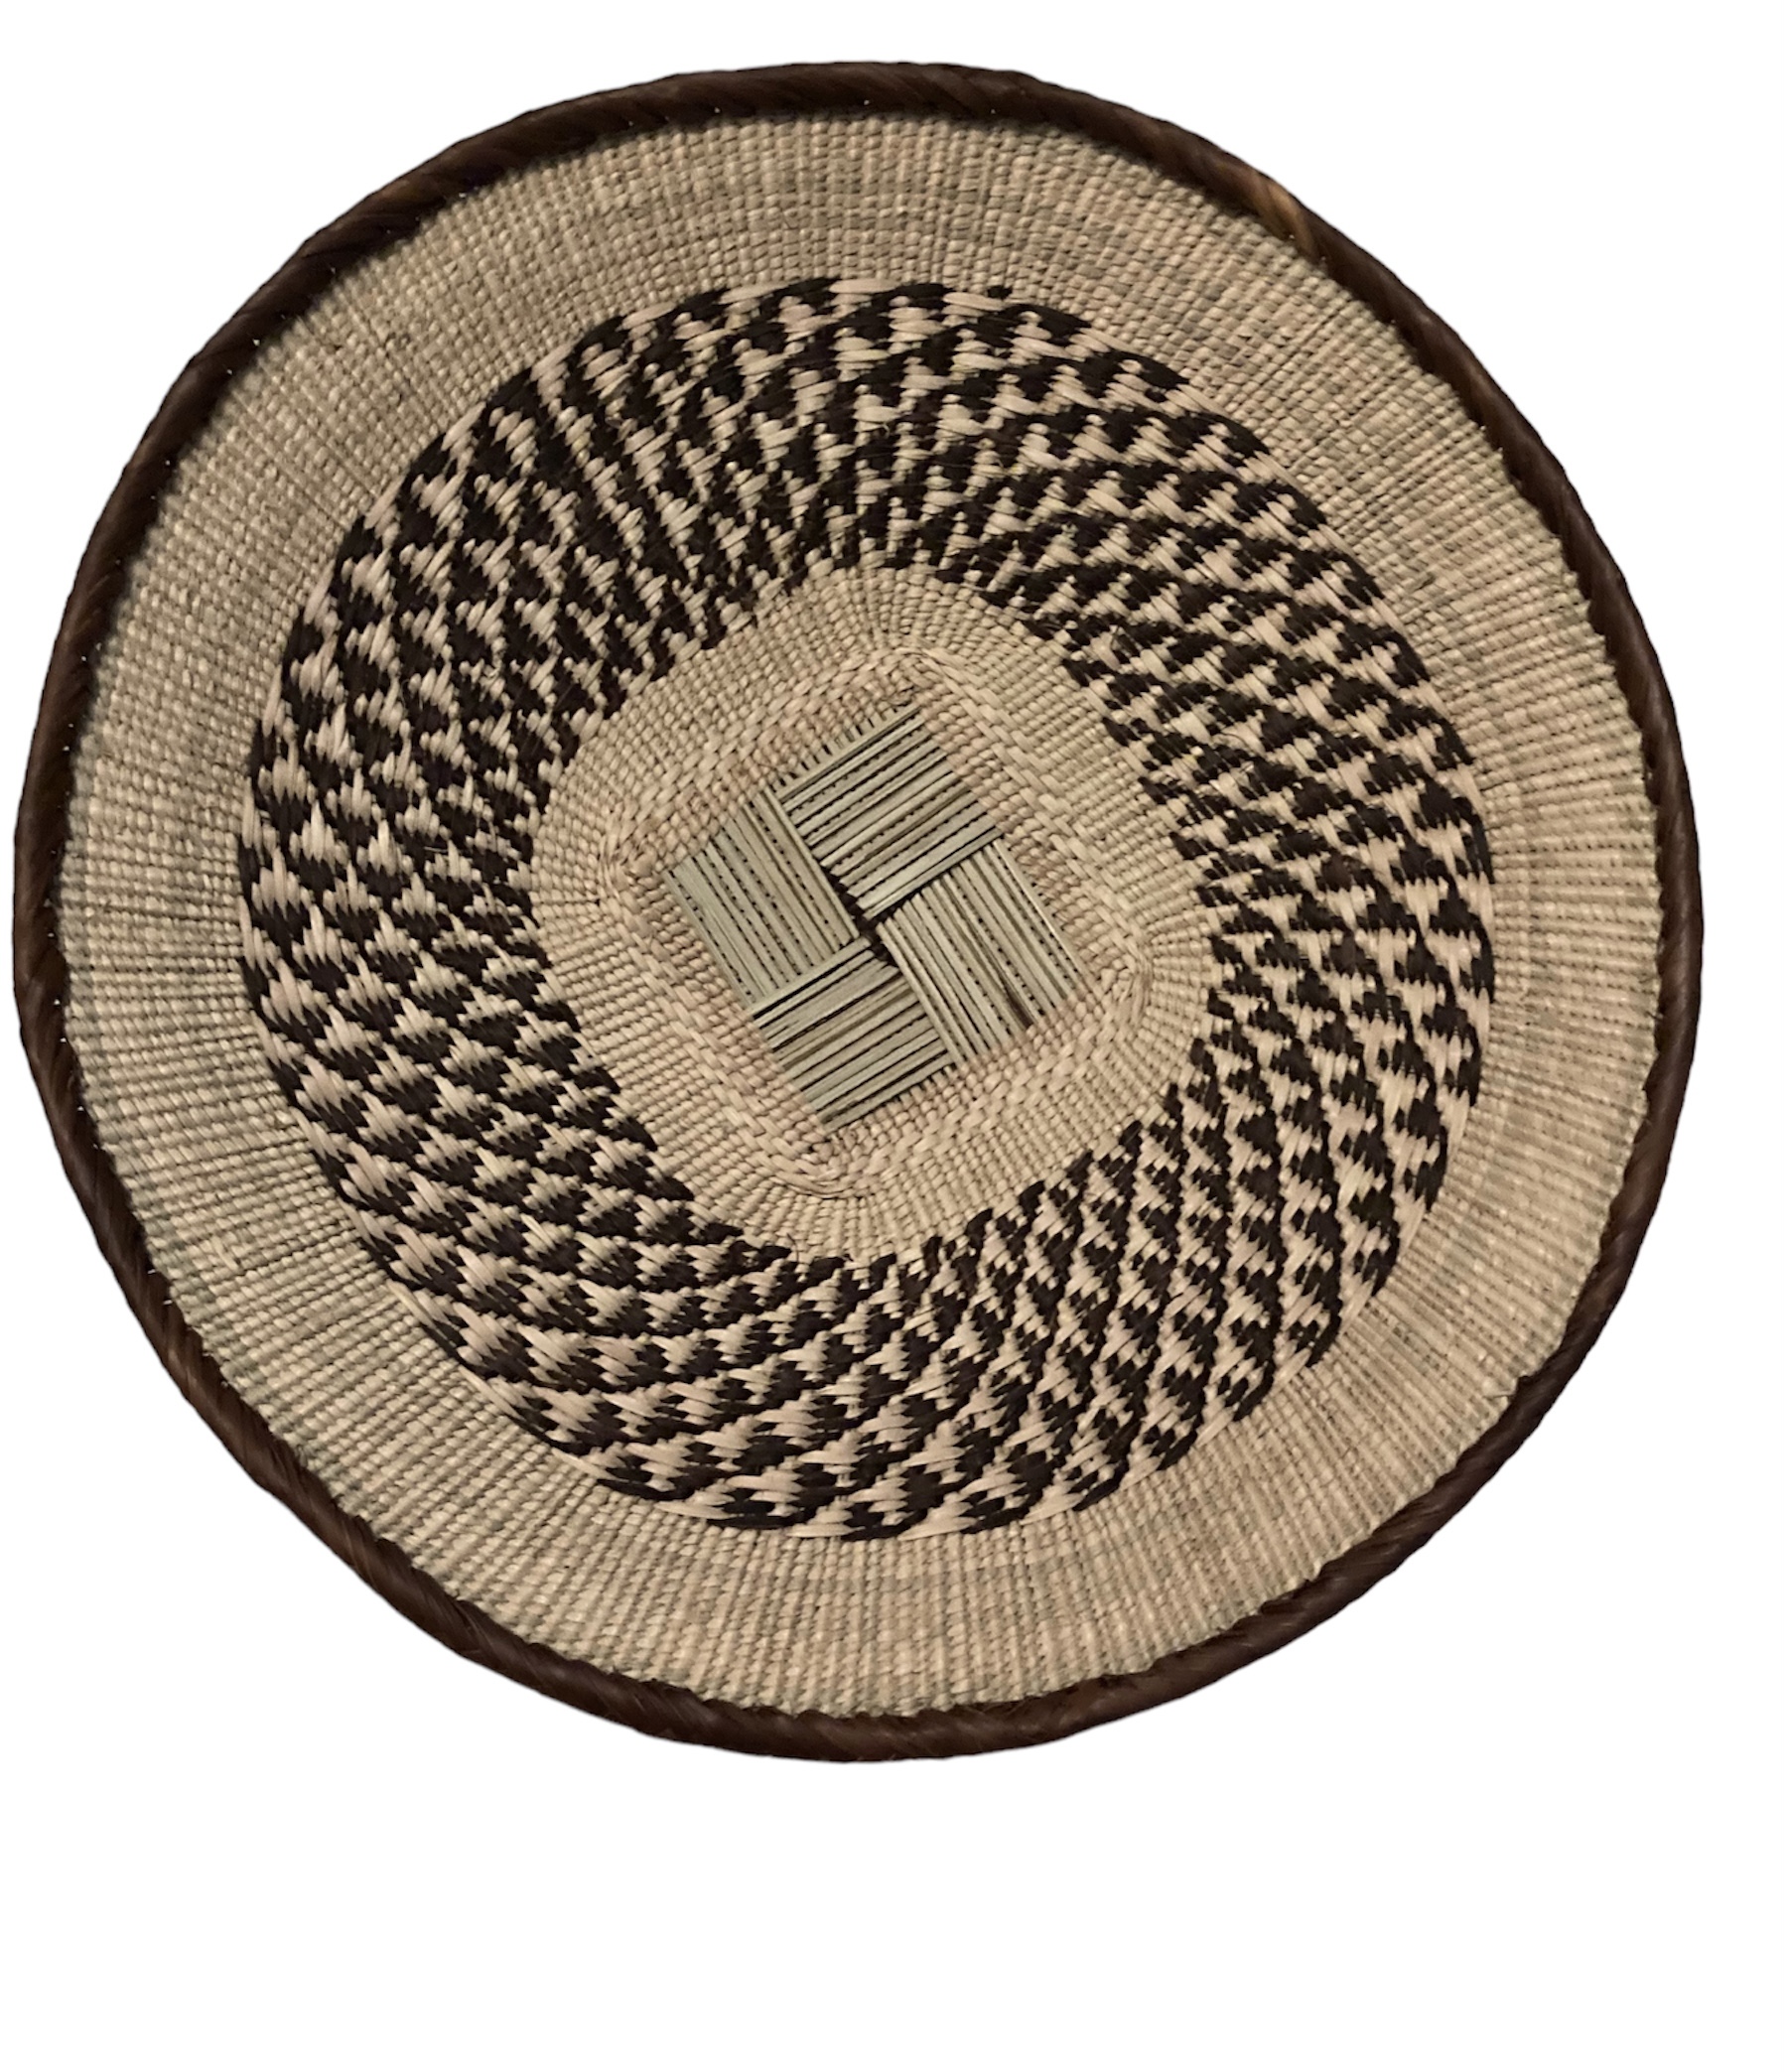 Tonga Basket from Zimbabwe - Design #027 - 15\" dia.